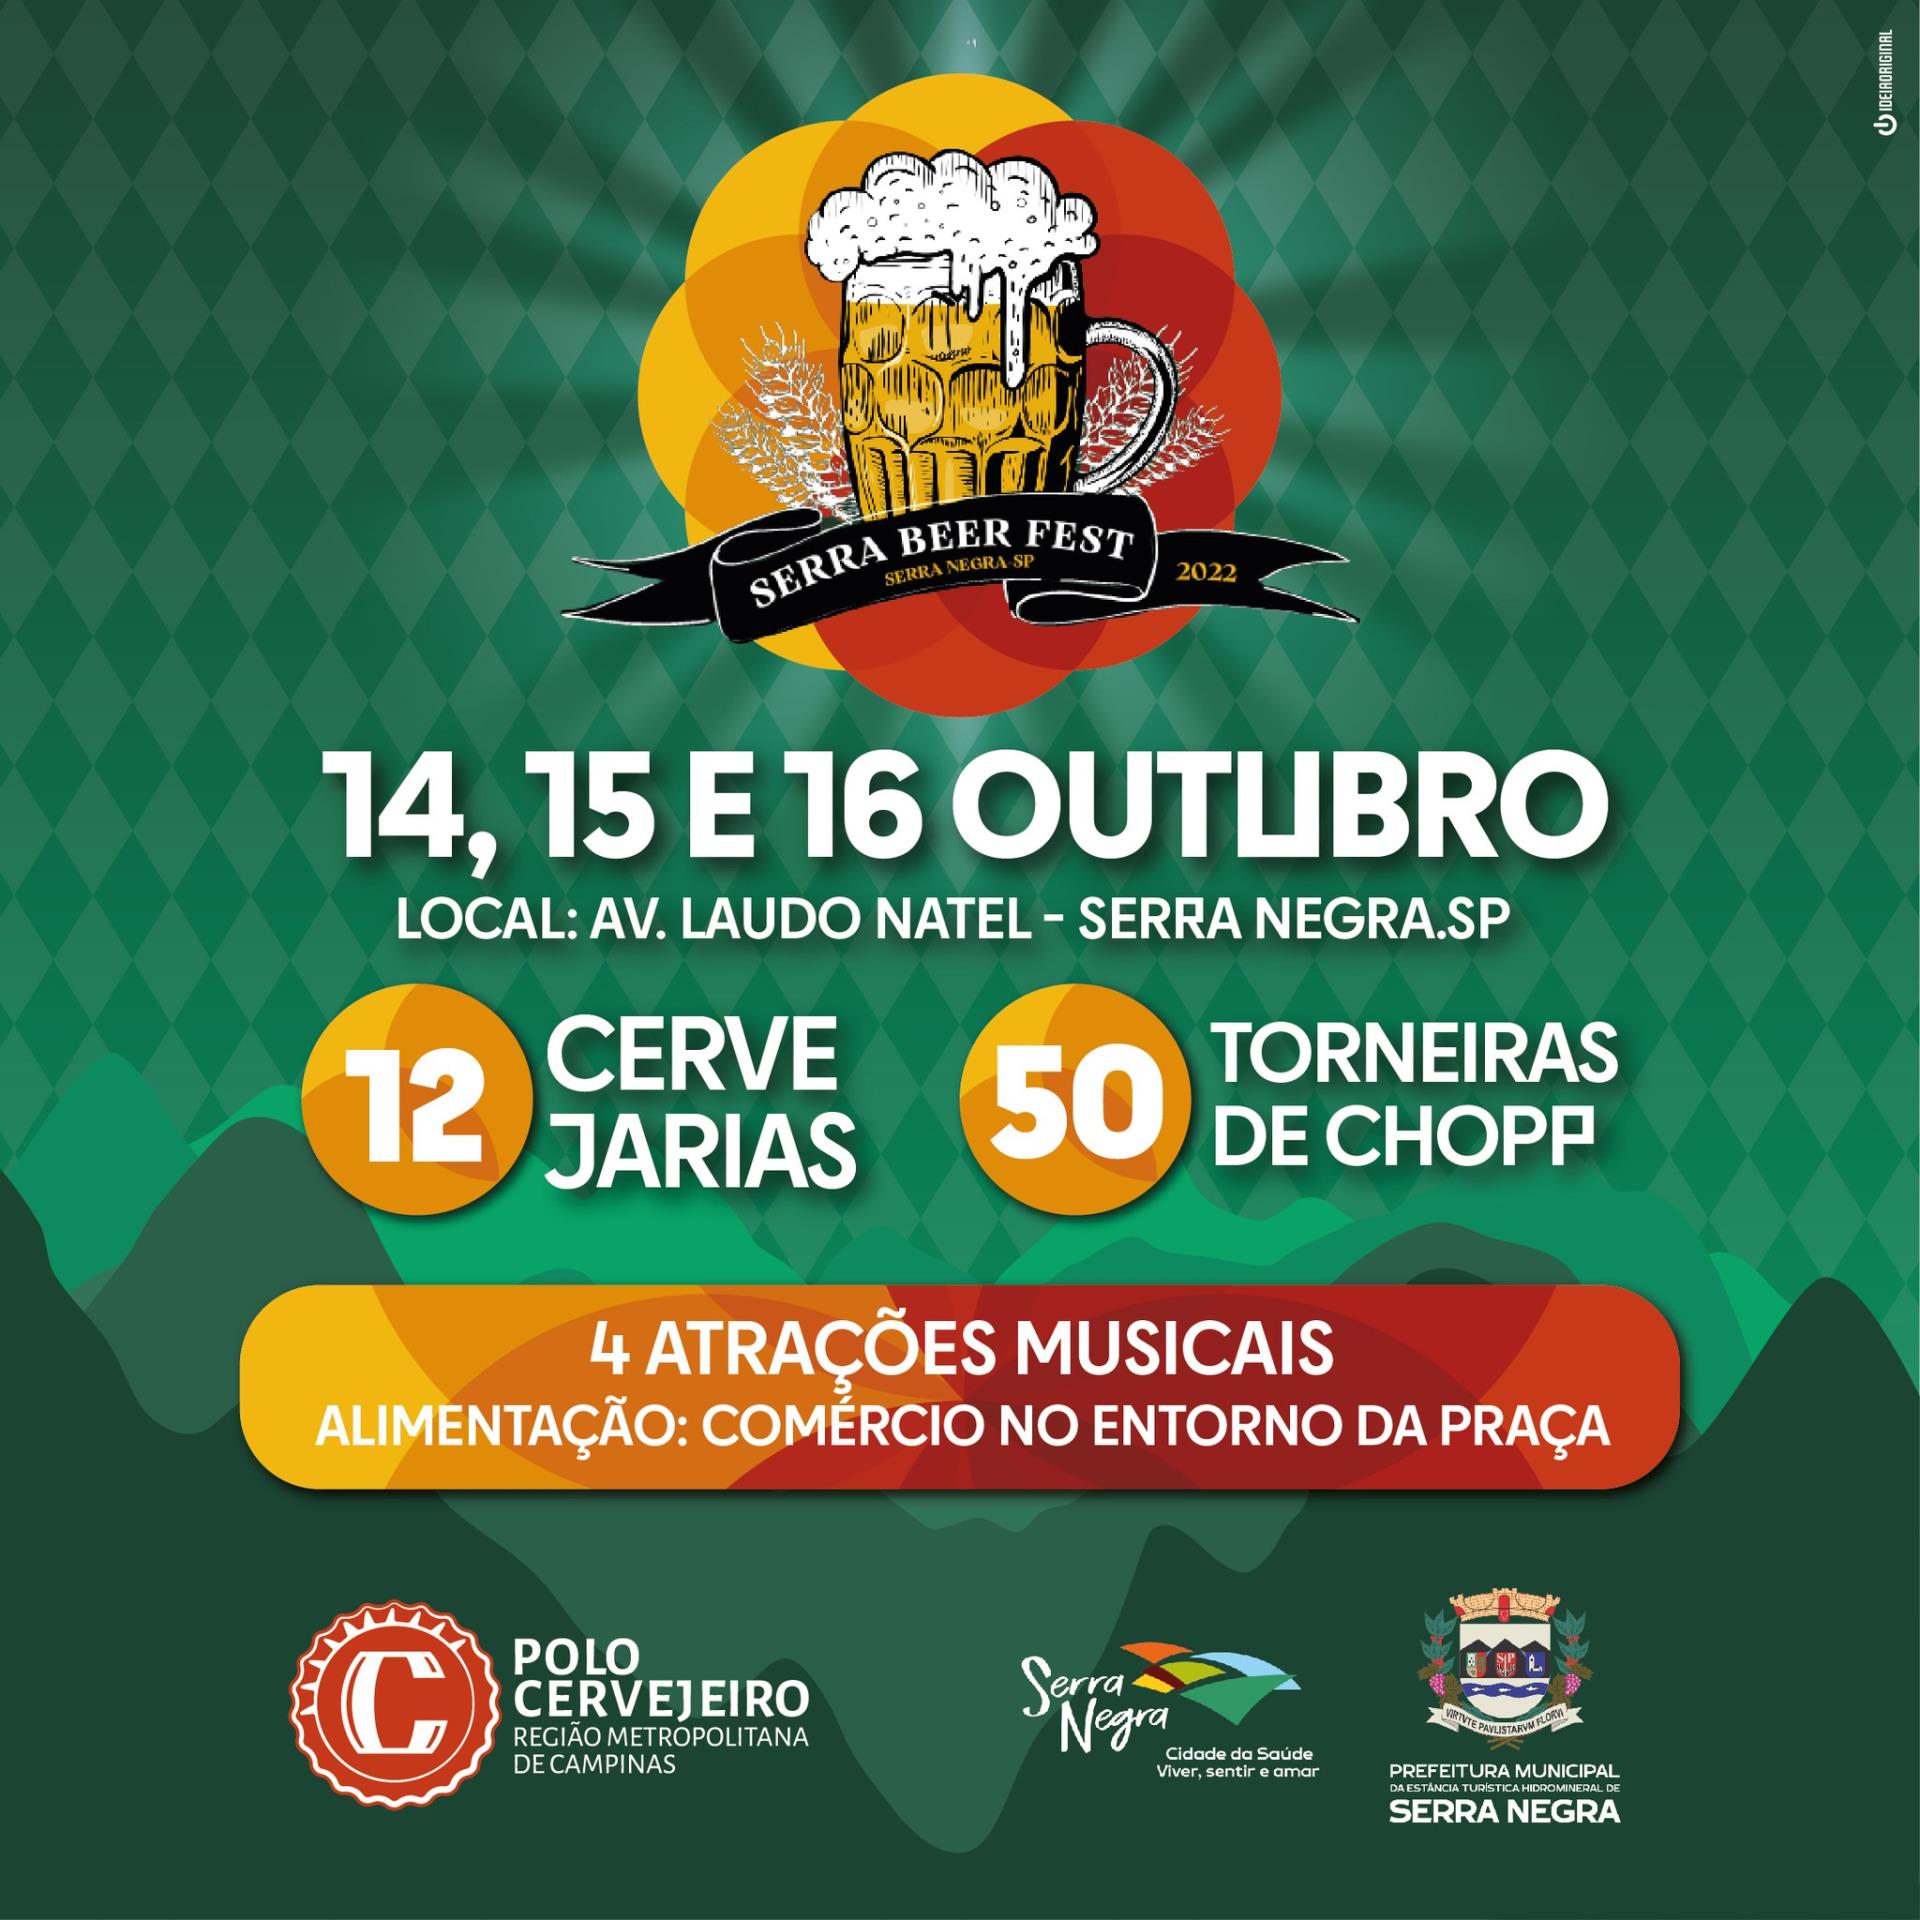 Serra Beer Fest